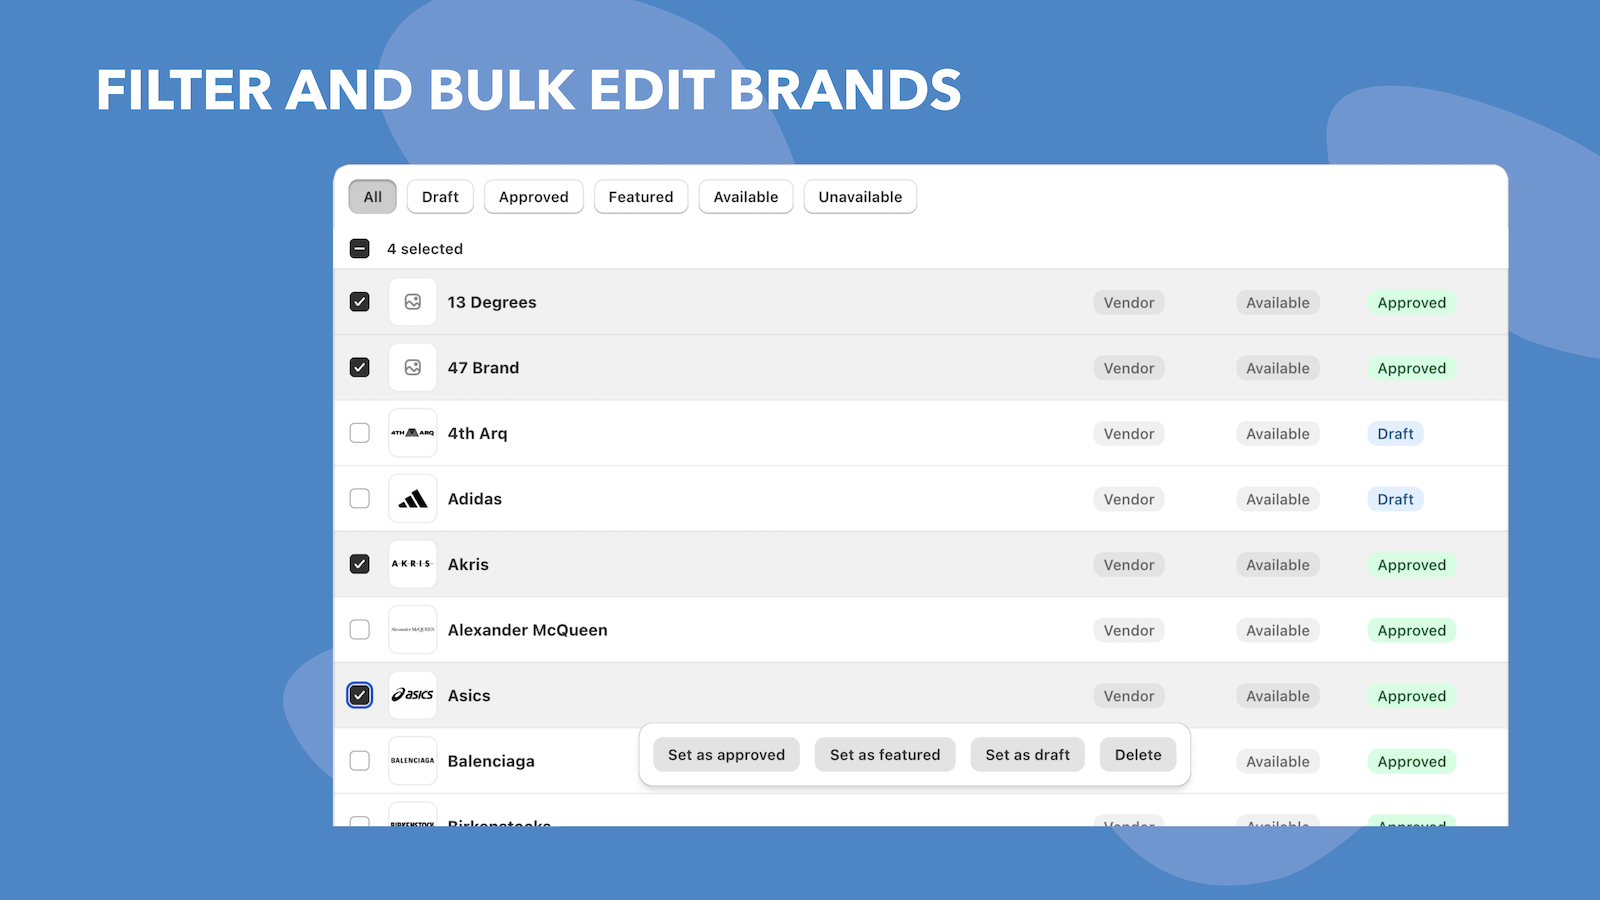 Filter and bulk edit brand